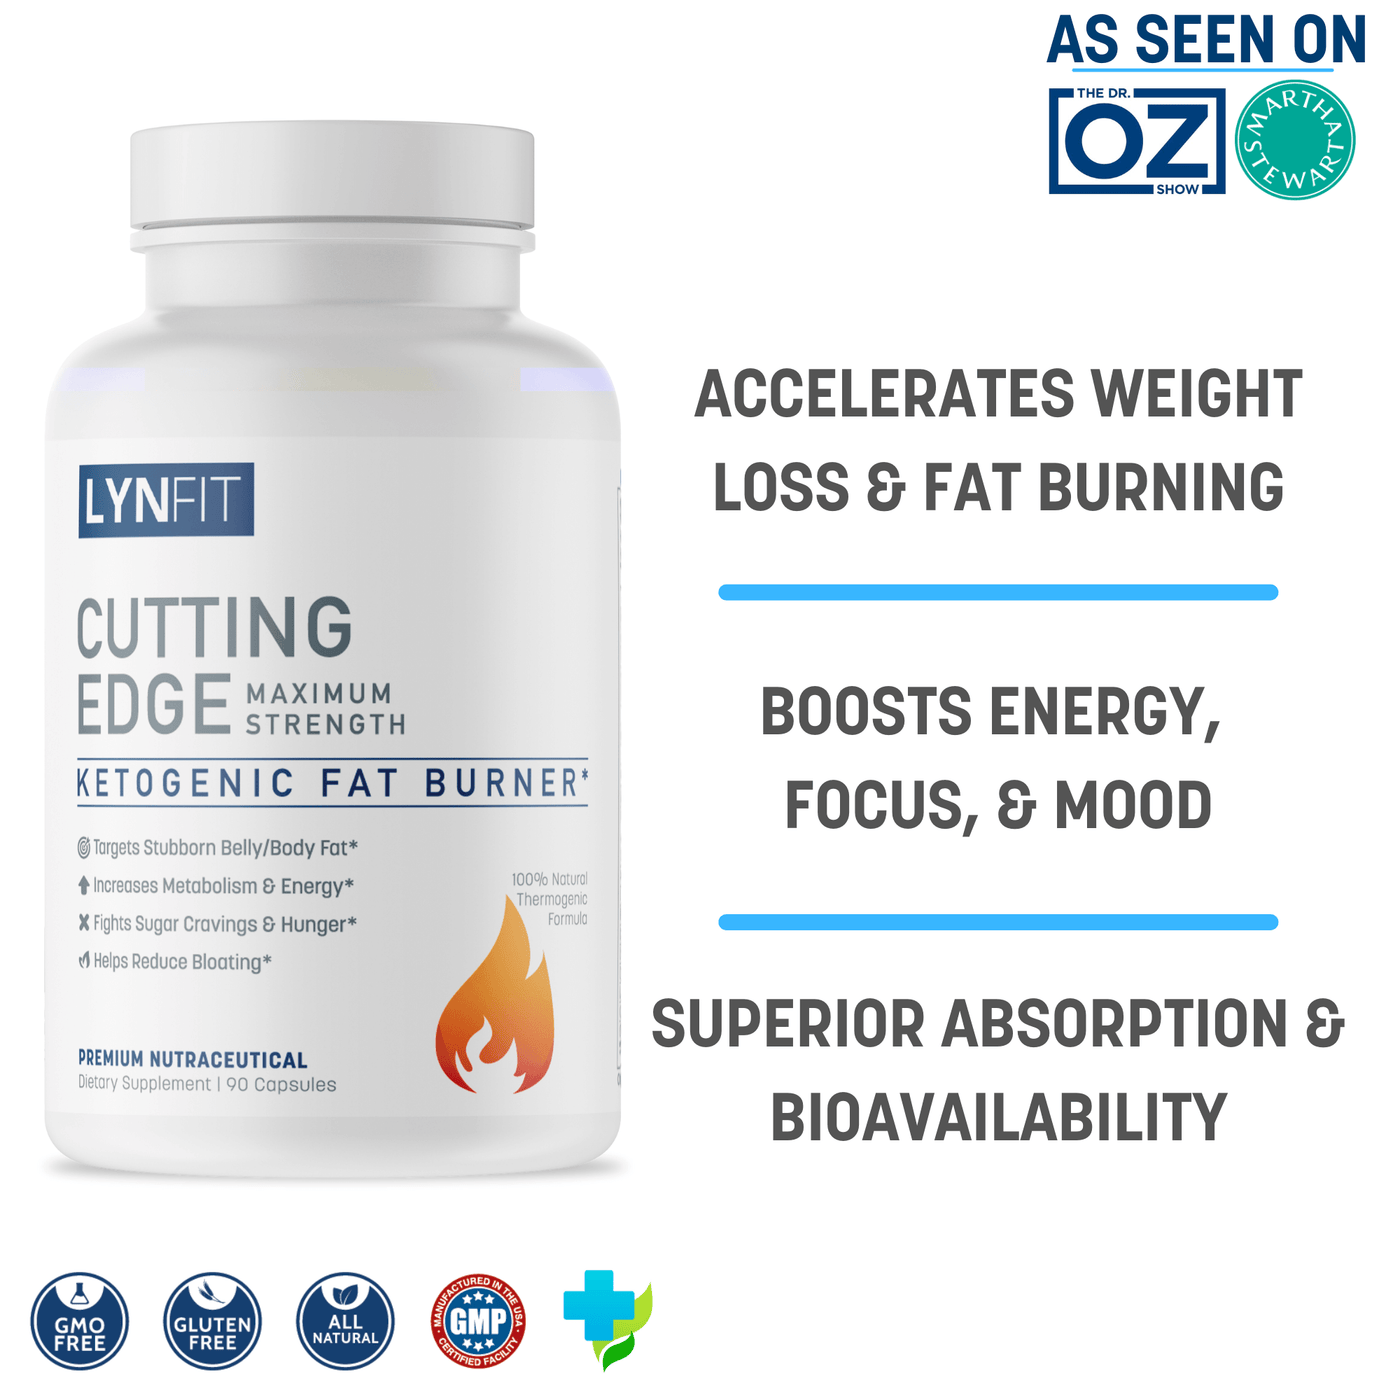 All-natural fat burner supplement